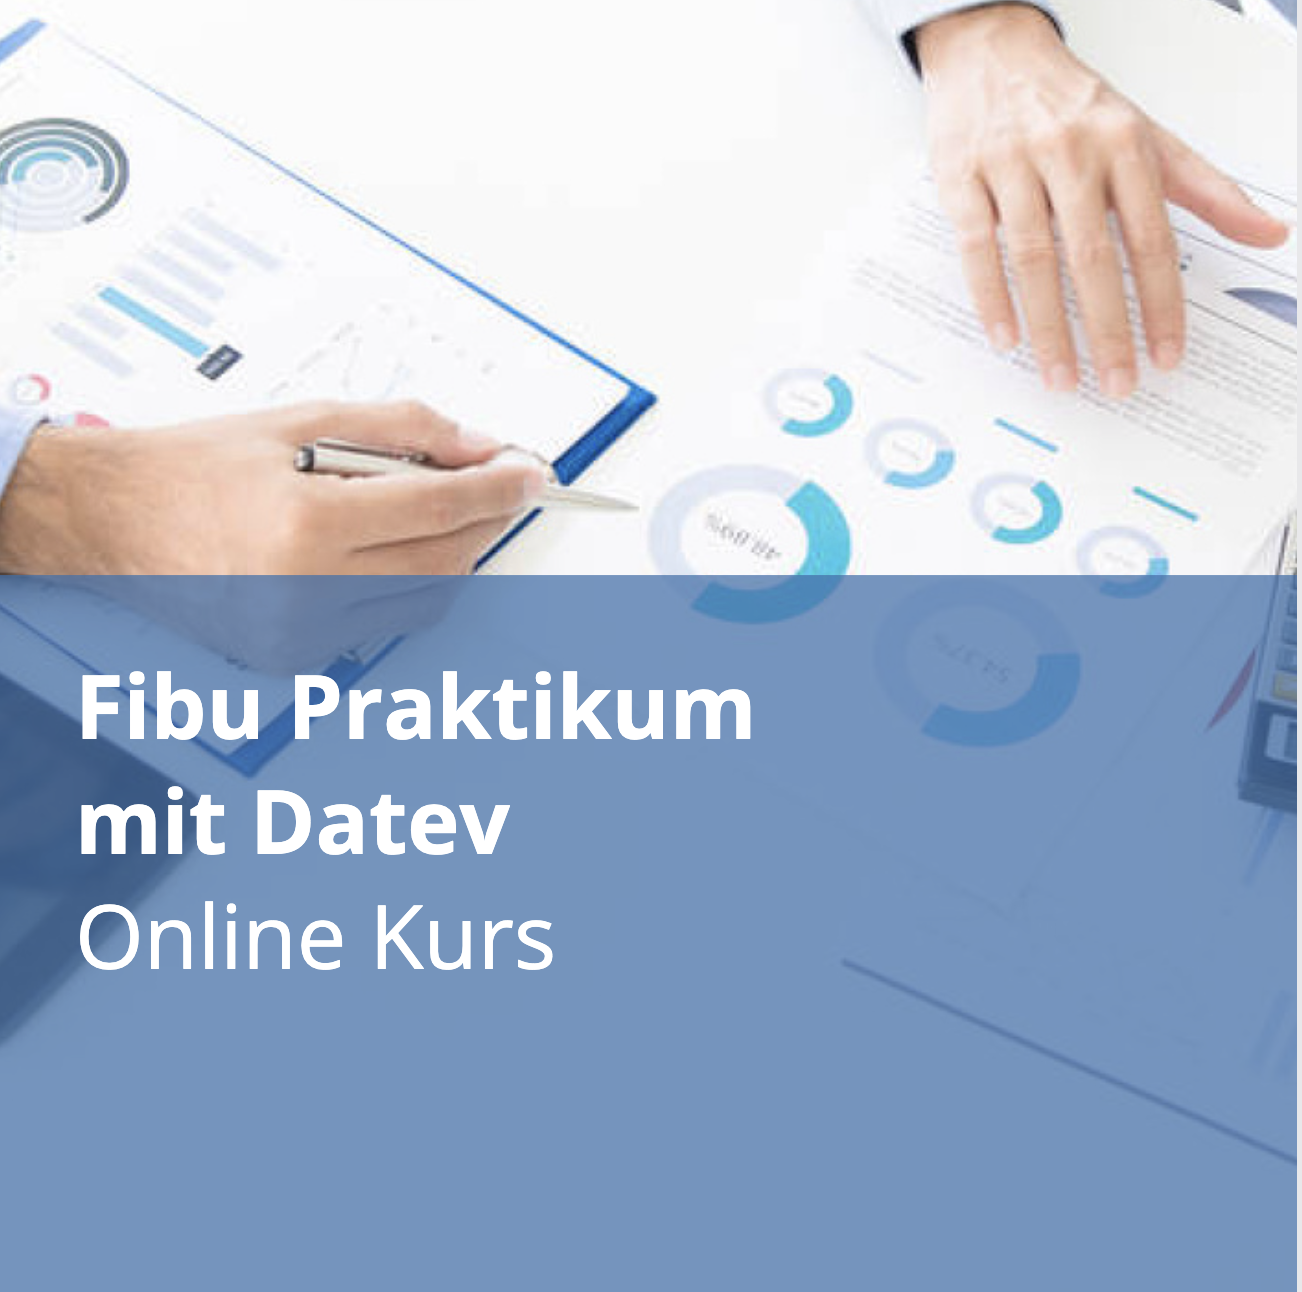 Datev Software Online Kurs